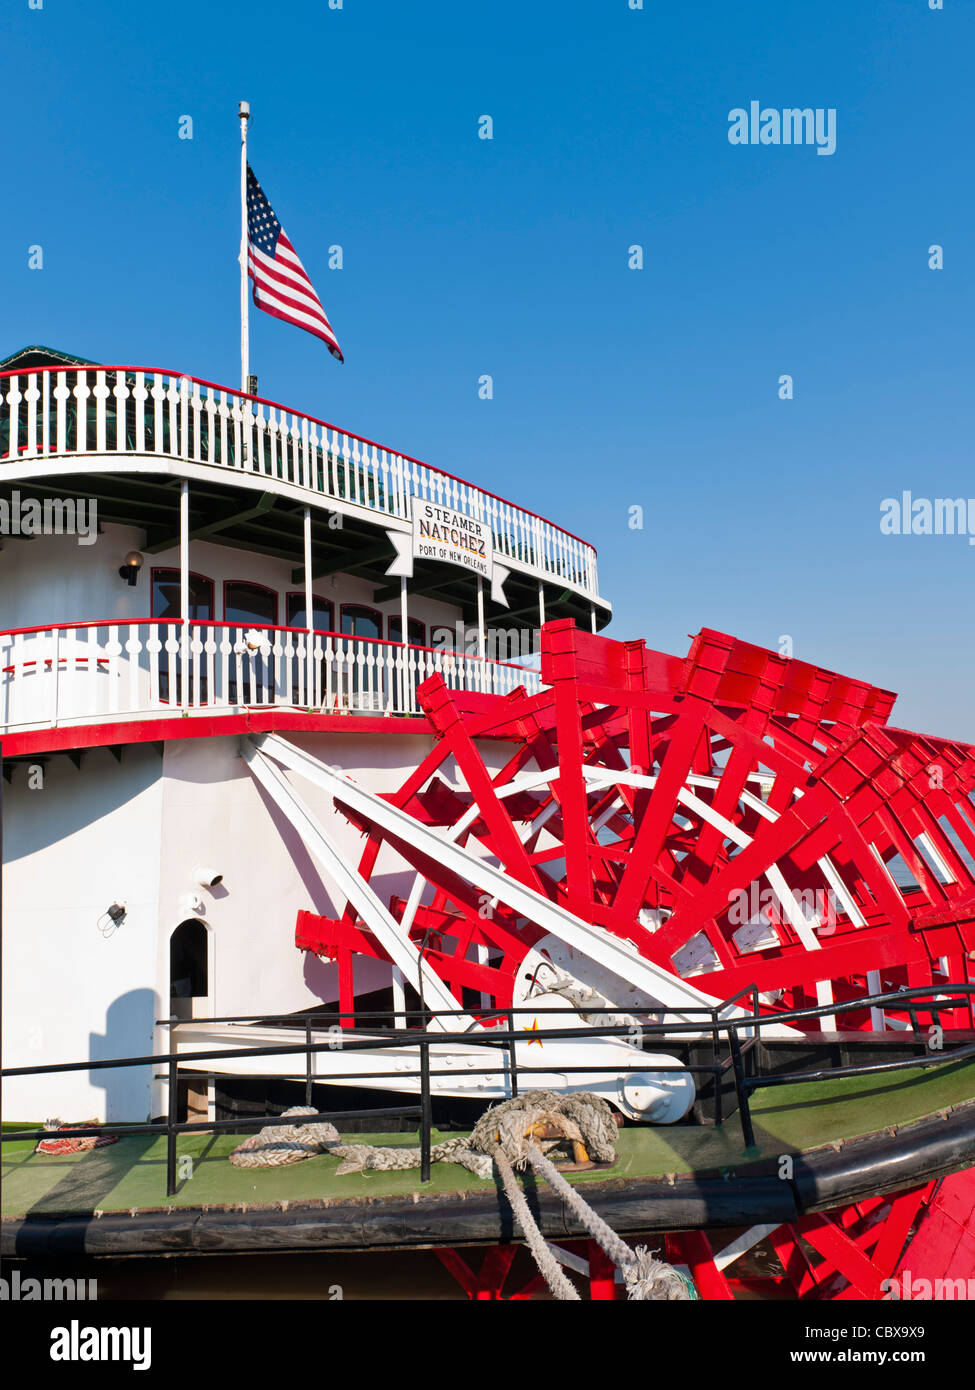 IX Natchez Steamboat cruise, Nueva Orleans Foto de stock